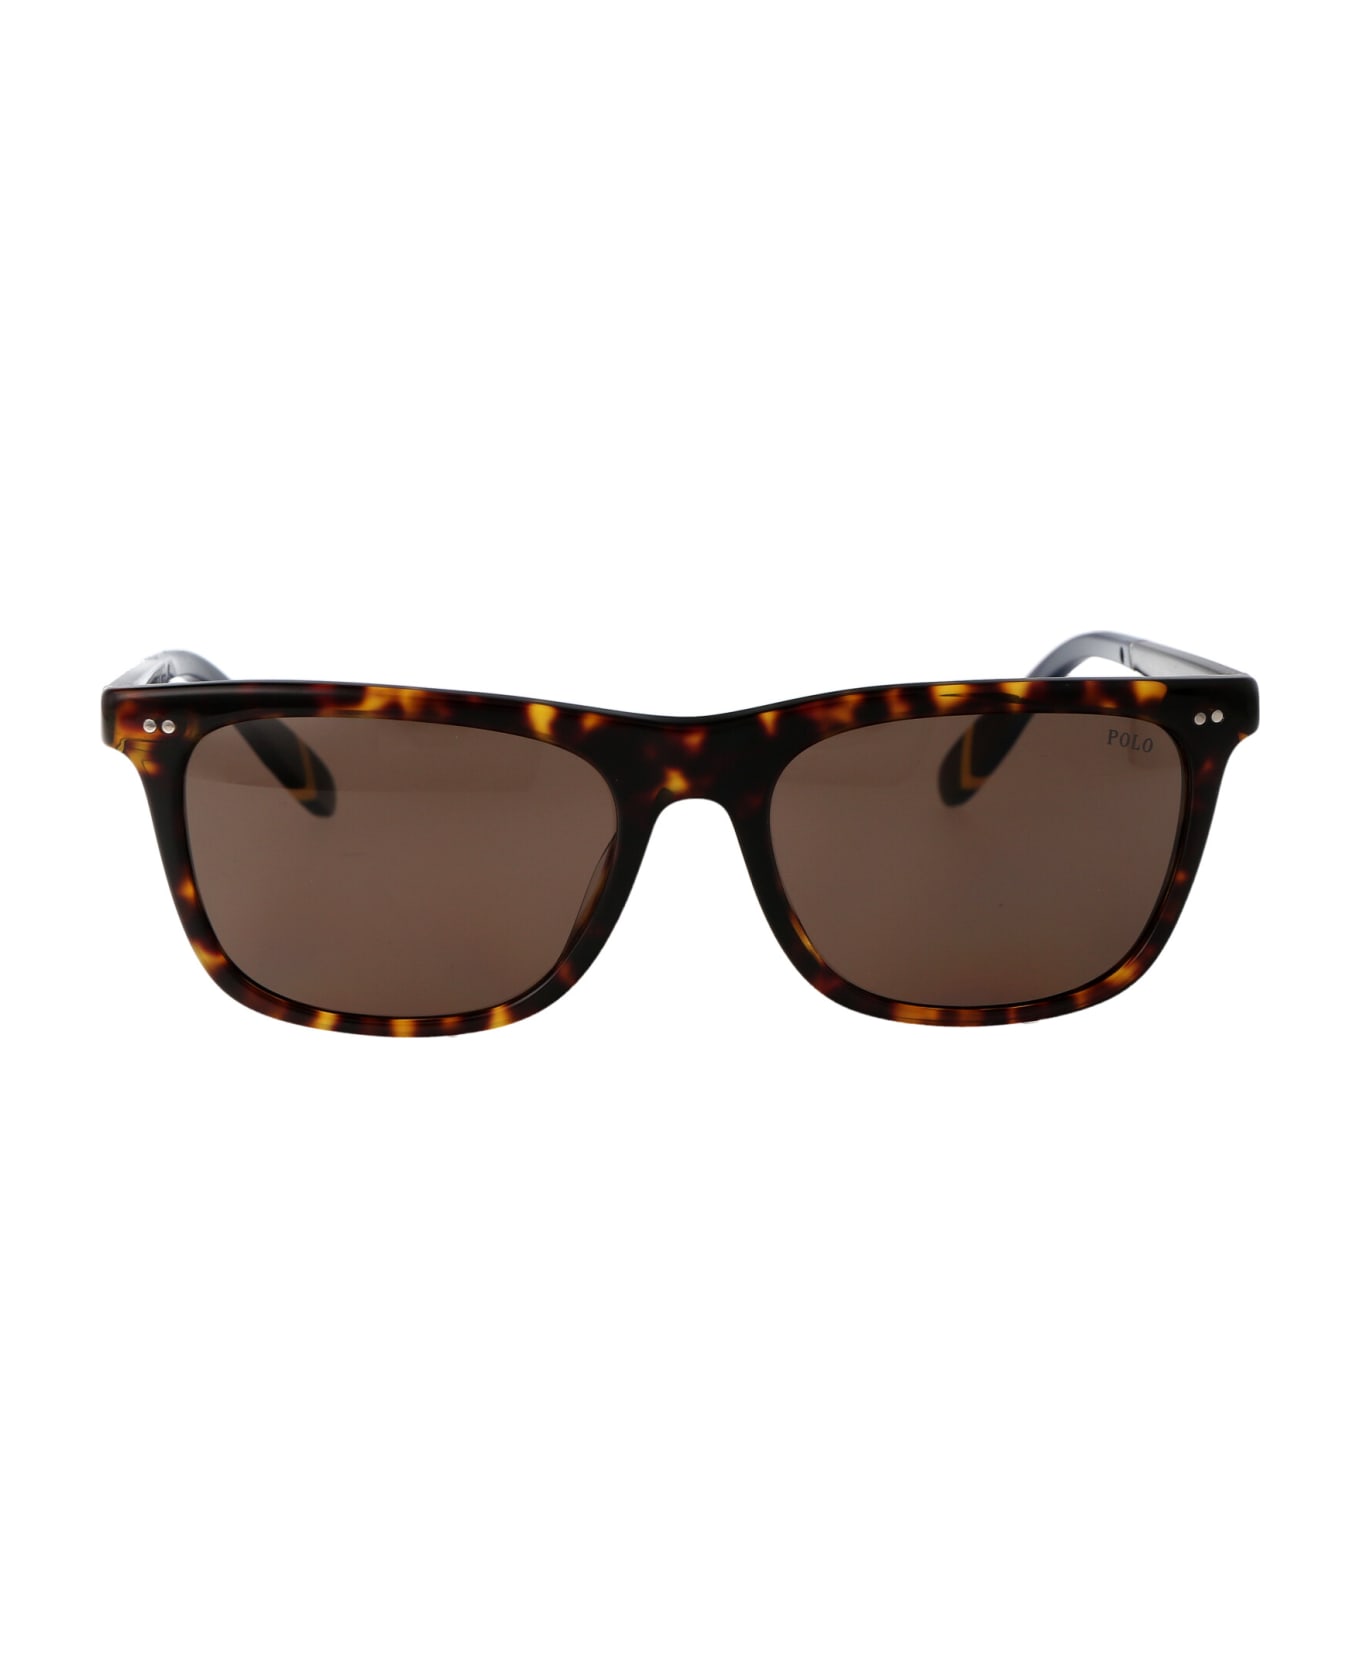 Polo Ralph Lauren 0ph4205u Sunglasses - 500373 Shiny Dark Havana